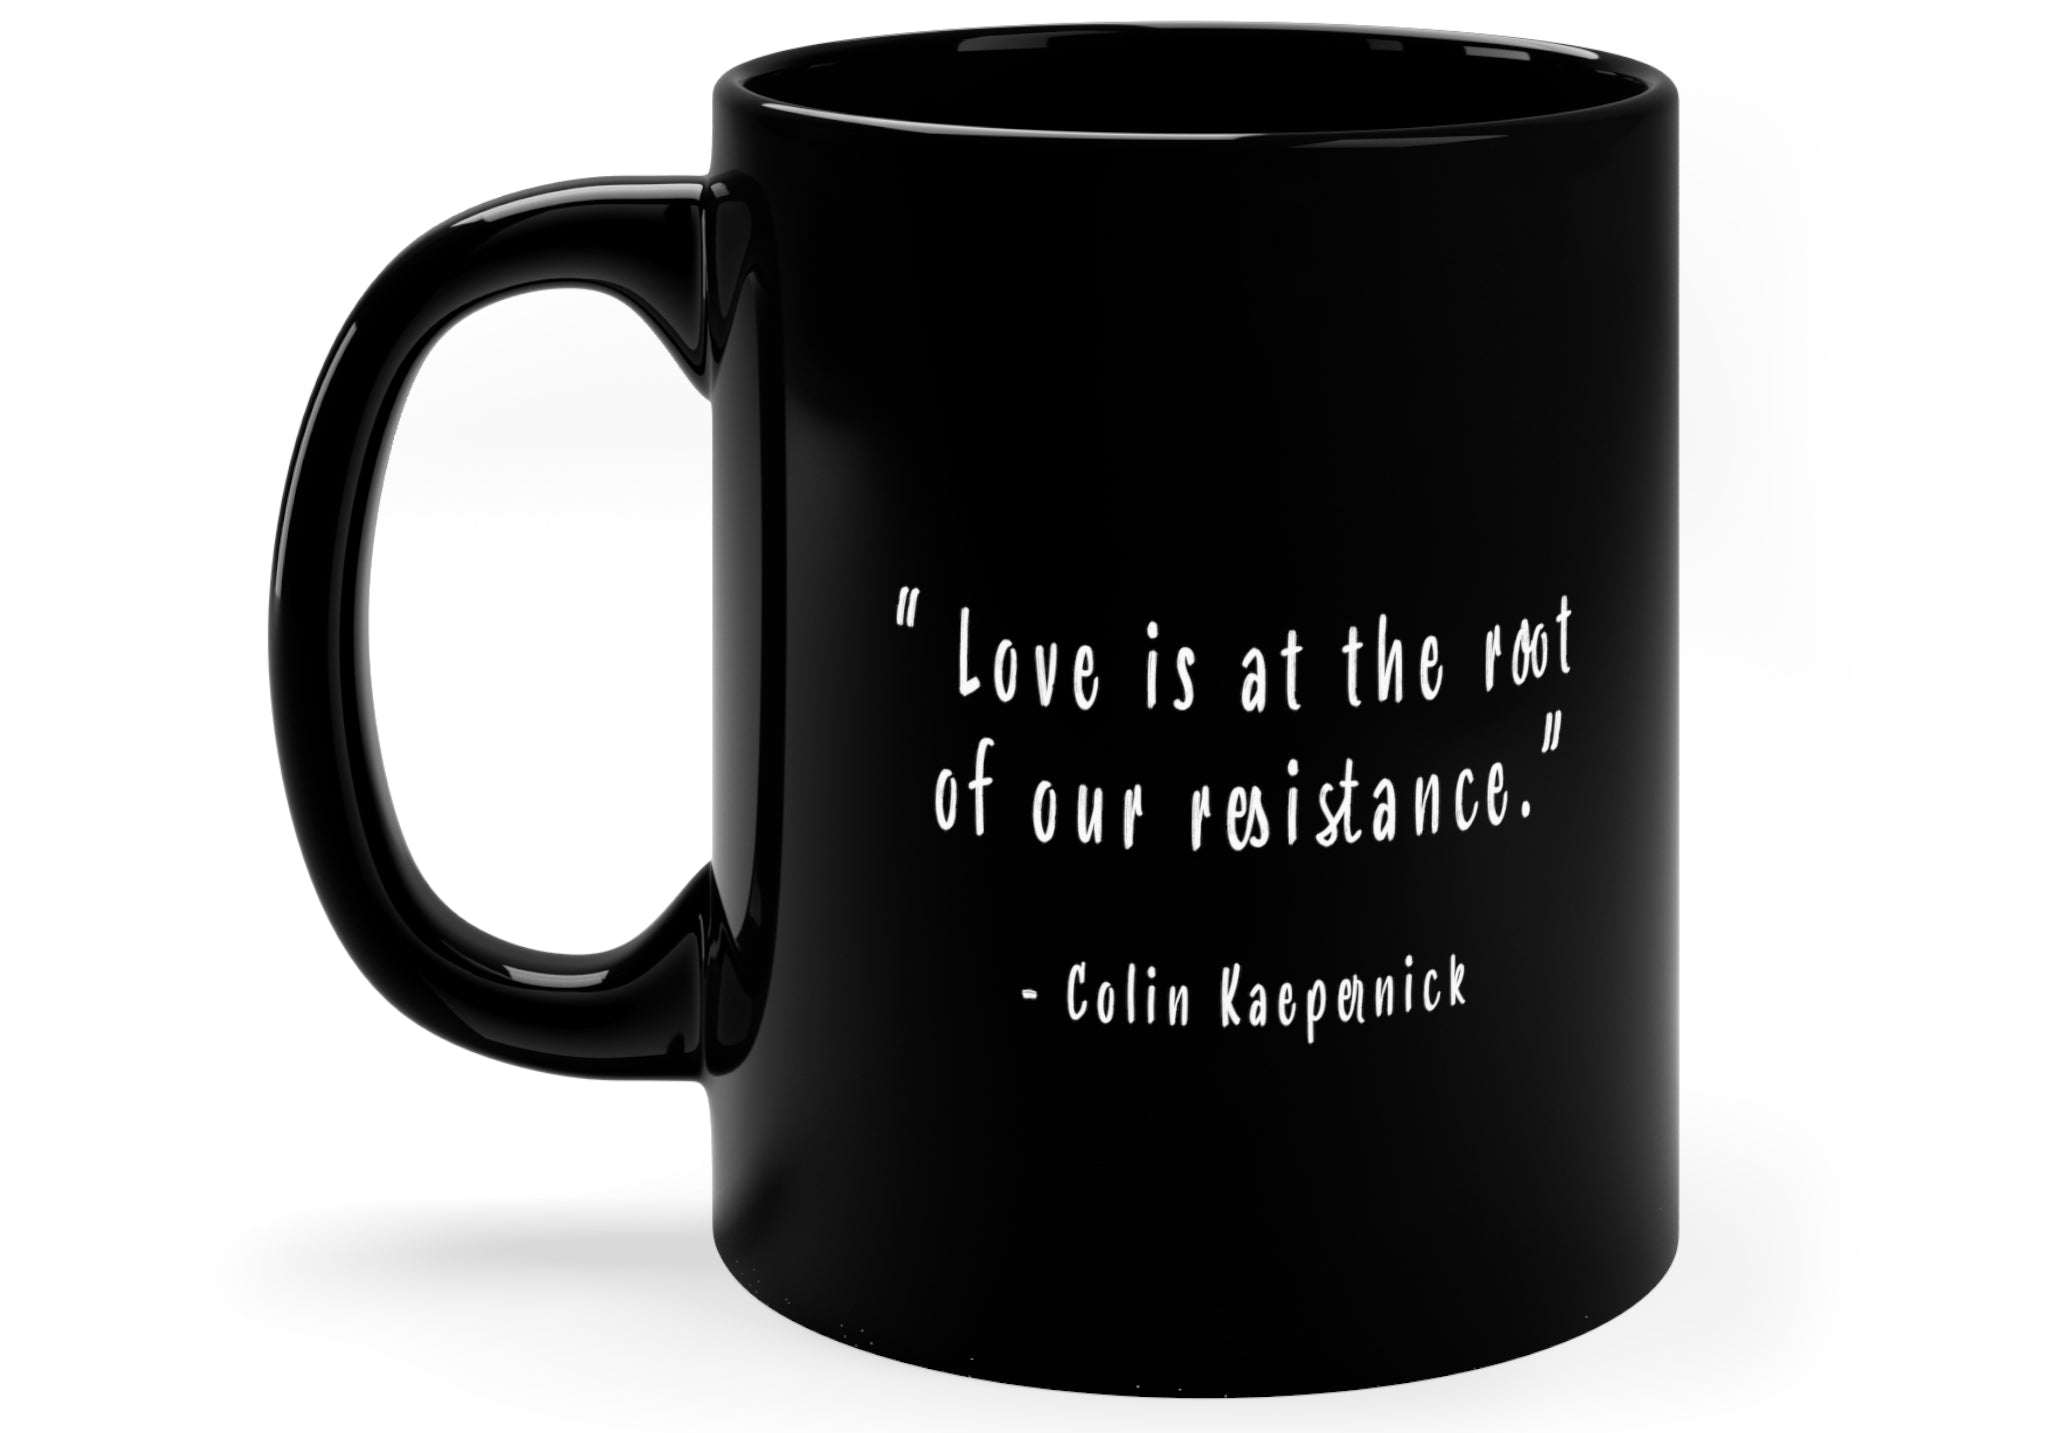 Colin Kaepernick | GQ | Justified  | Quote | Black Coffee Mug - Androo's Art